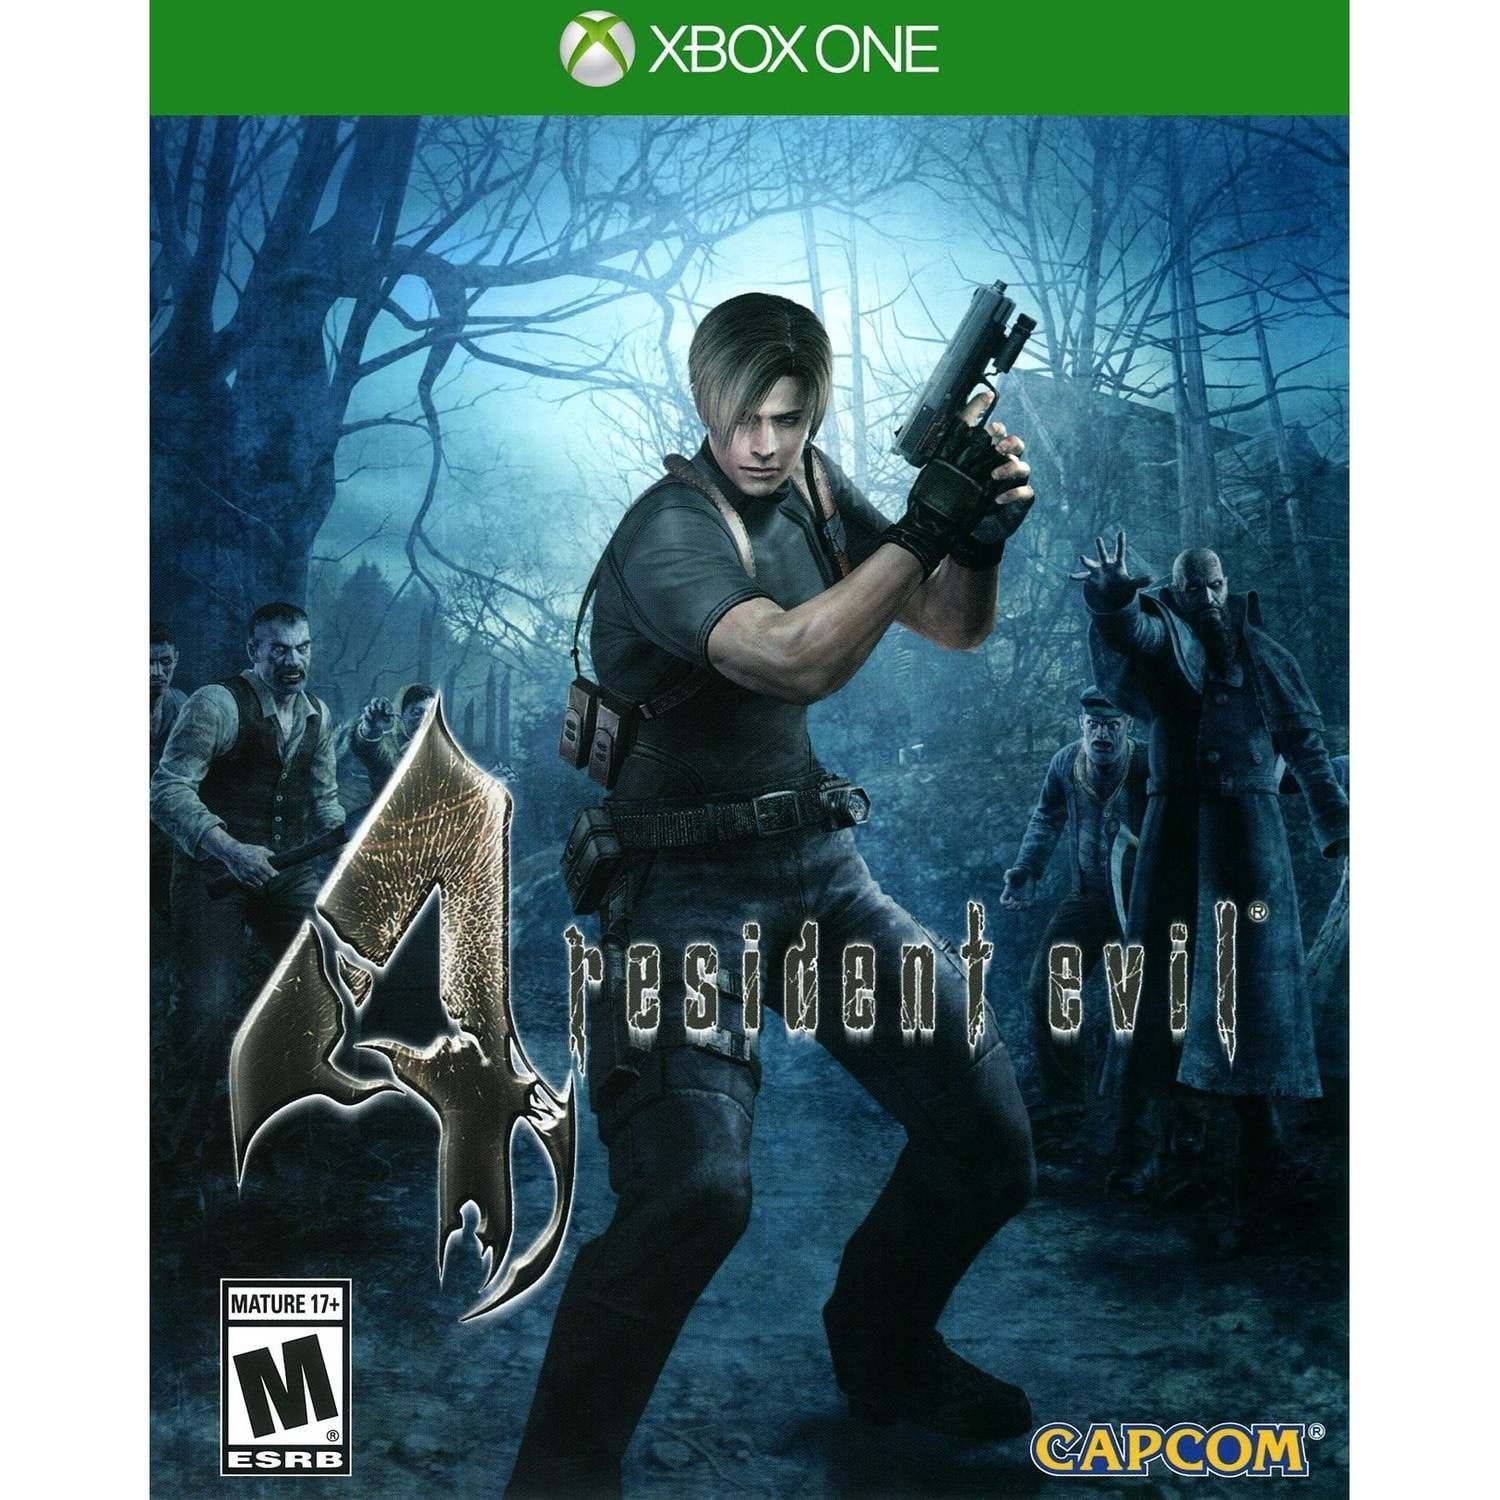 Resident evil 4 remake preo xbox